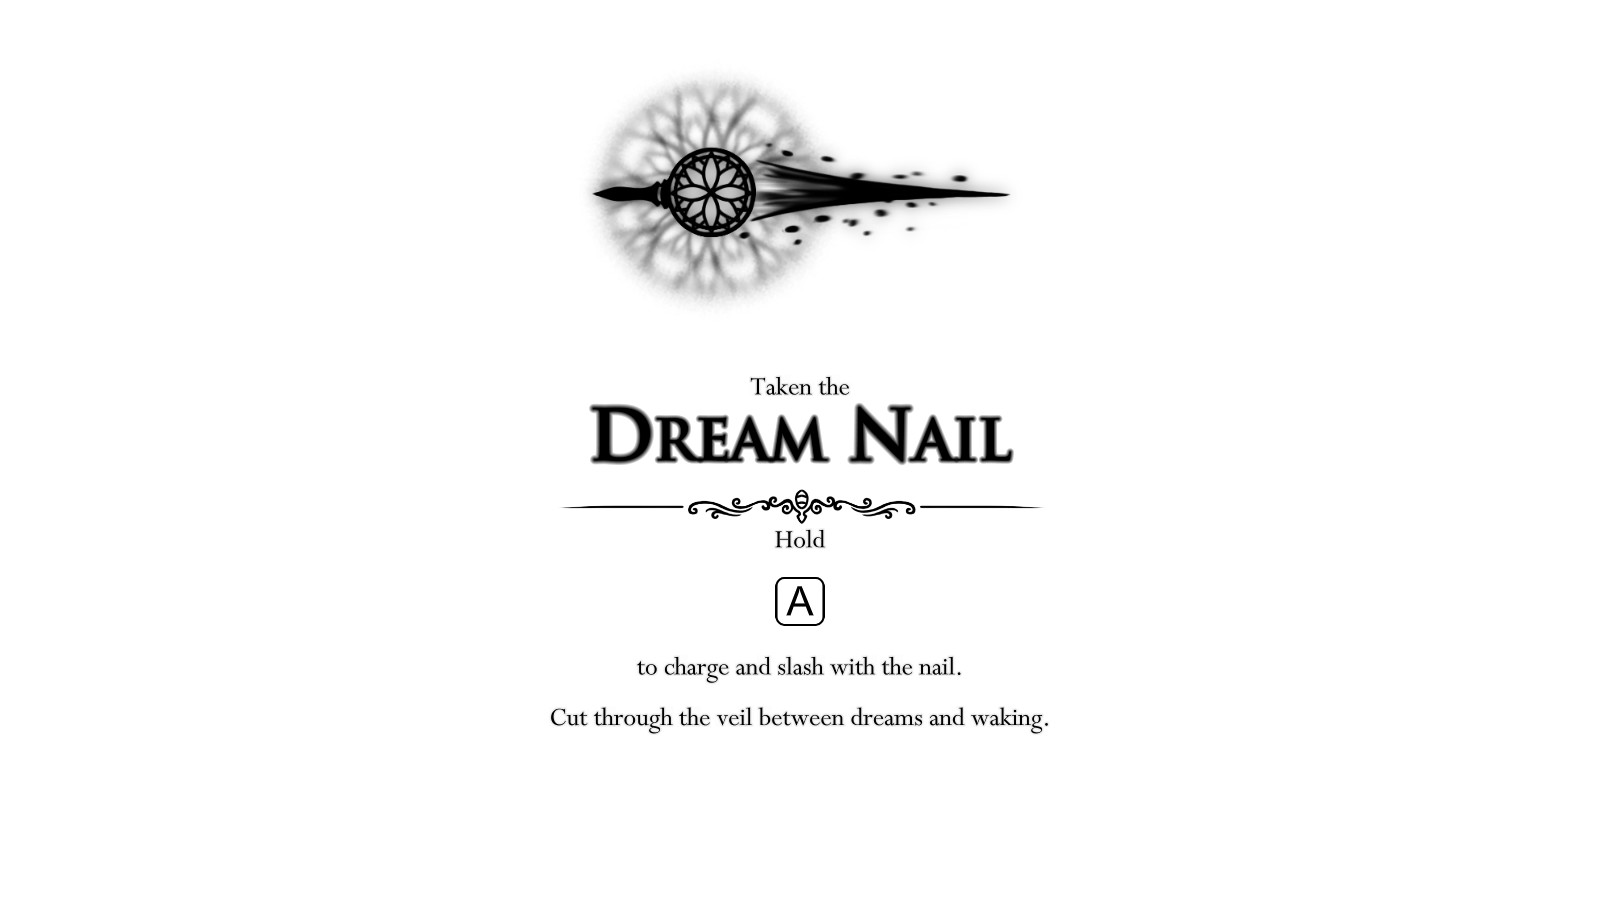 Dream nail sketch, dream nail info written down below